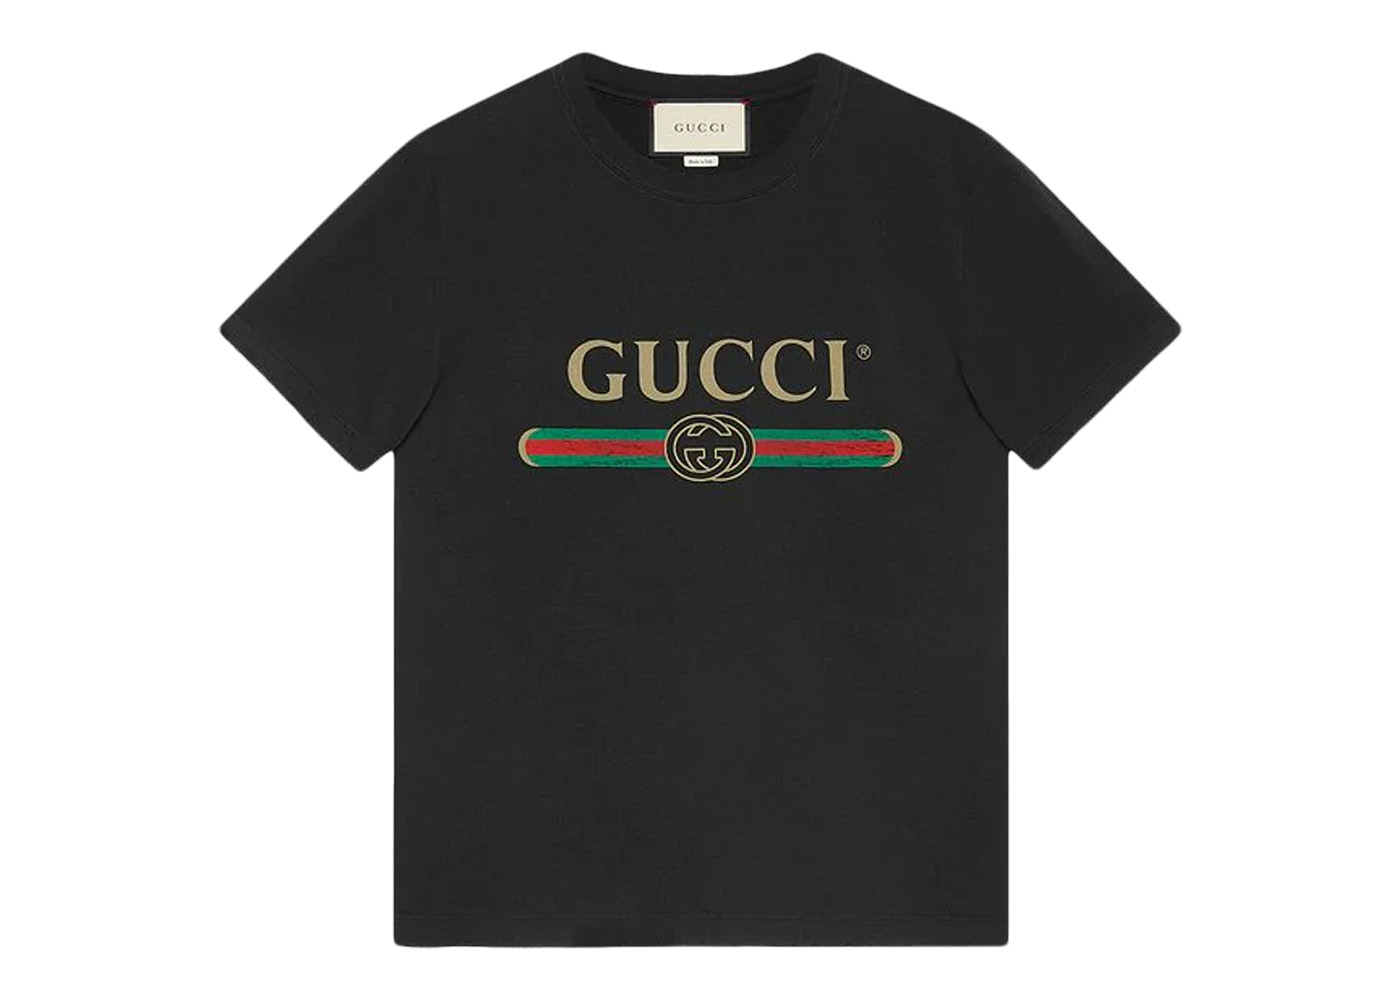 Buy Gucci Streetwear - StockX